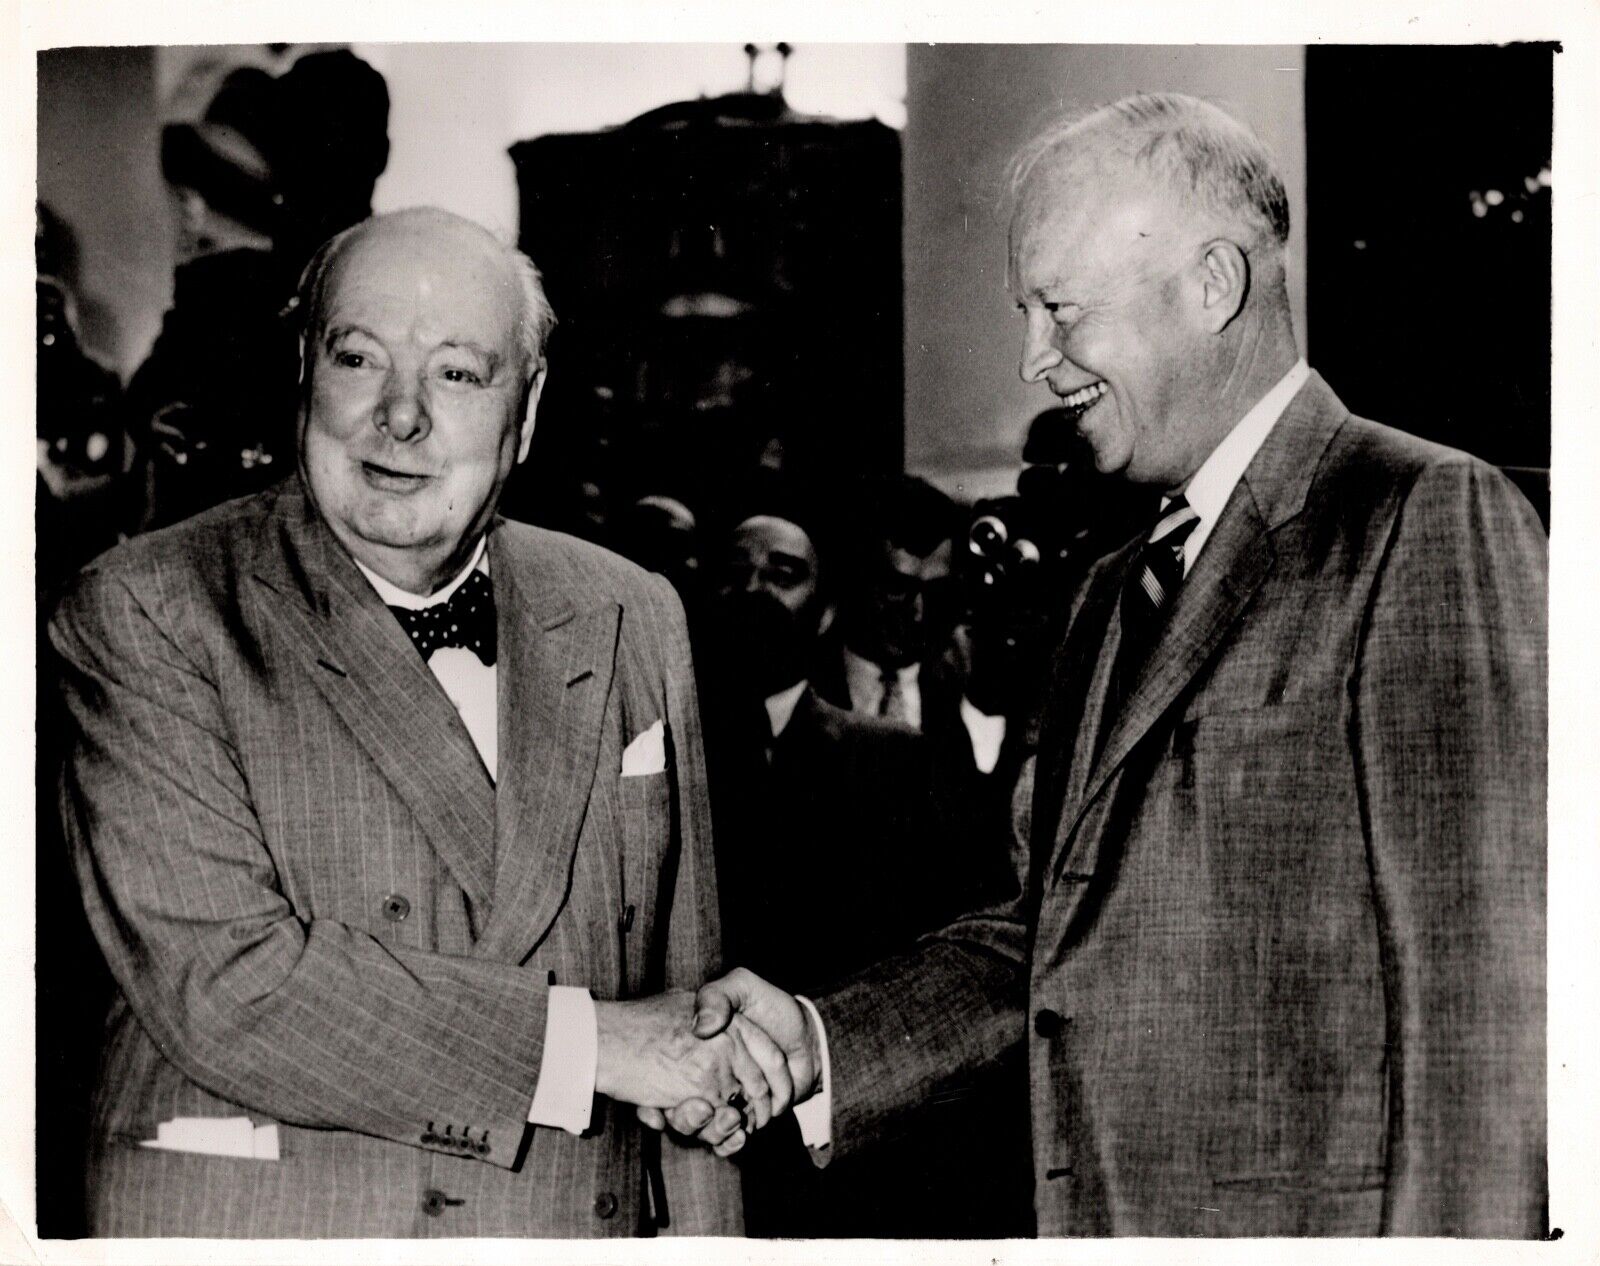 29 June 1954 press photo of Winston Churchill and Dwight D. Eisenhower